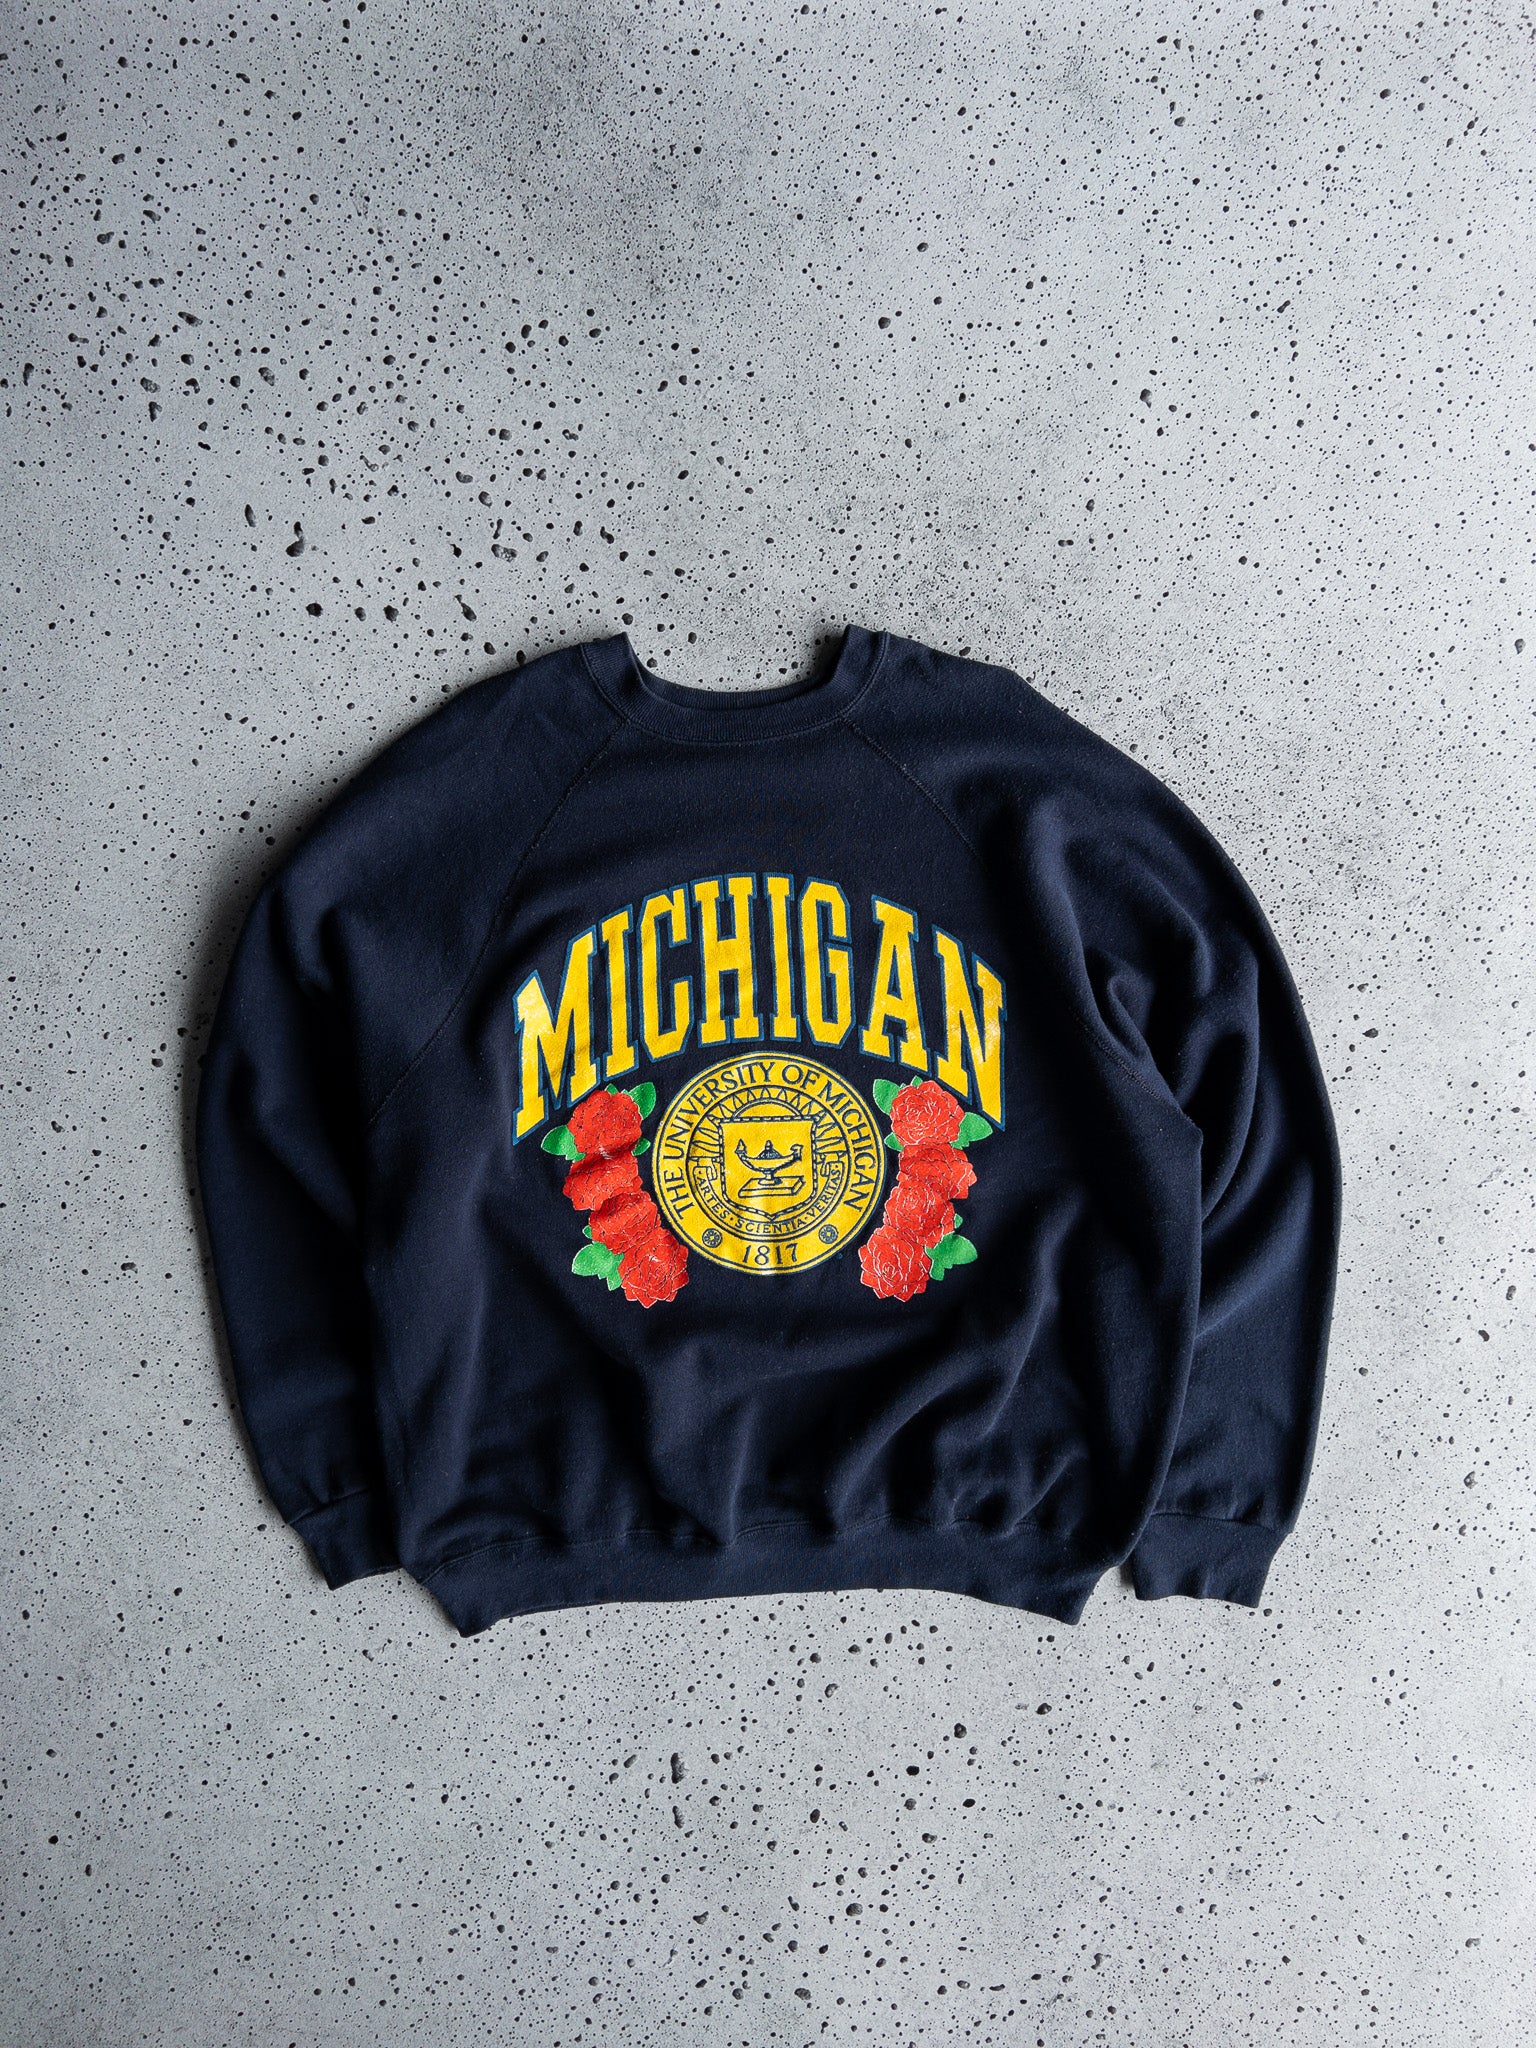 Vintage University of Michigan Sweatshirt (XL)